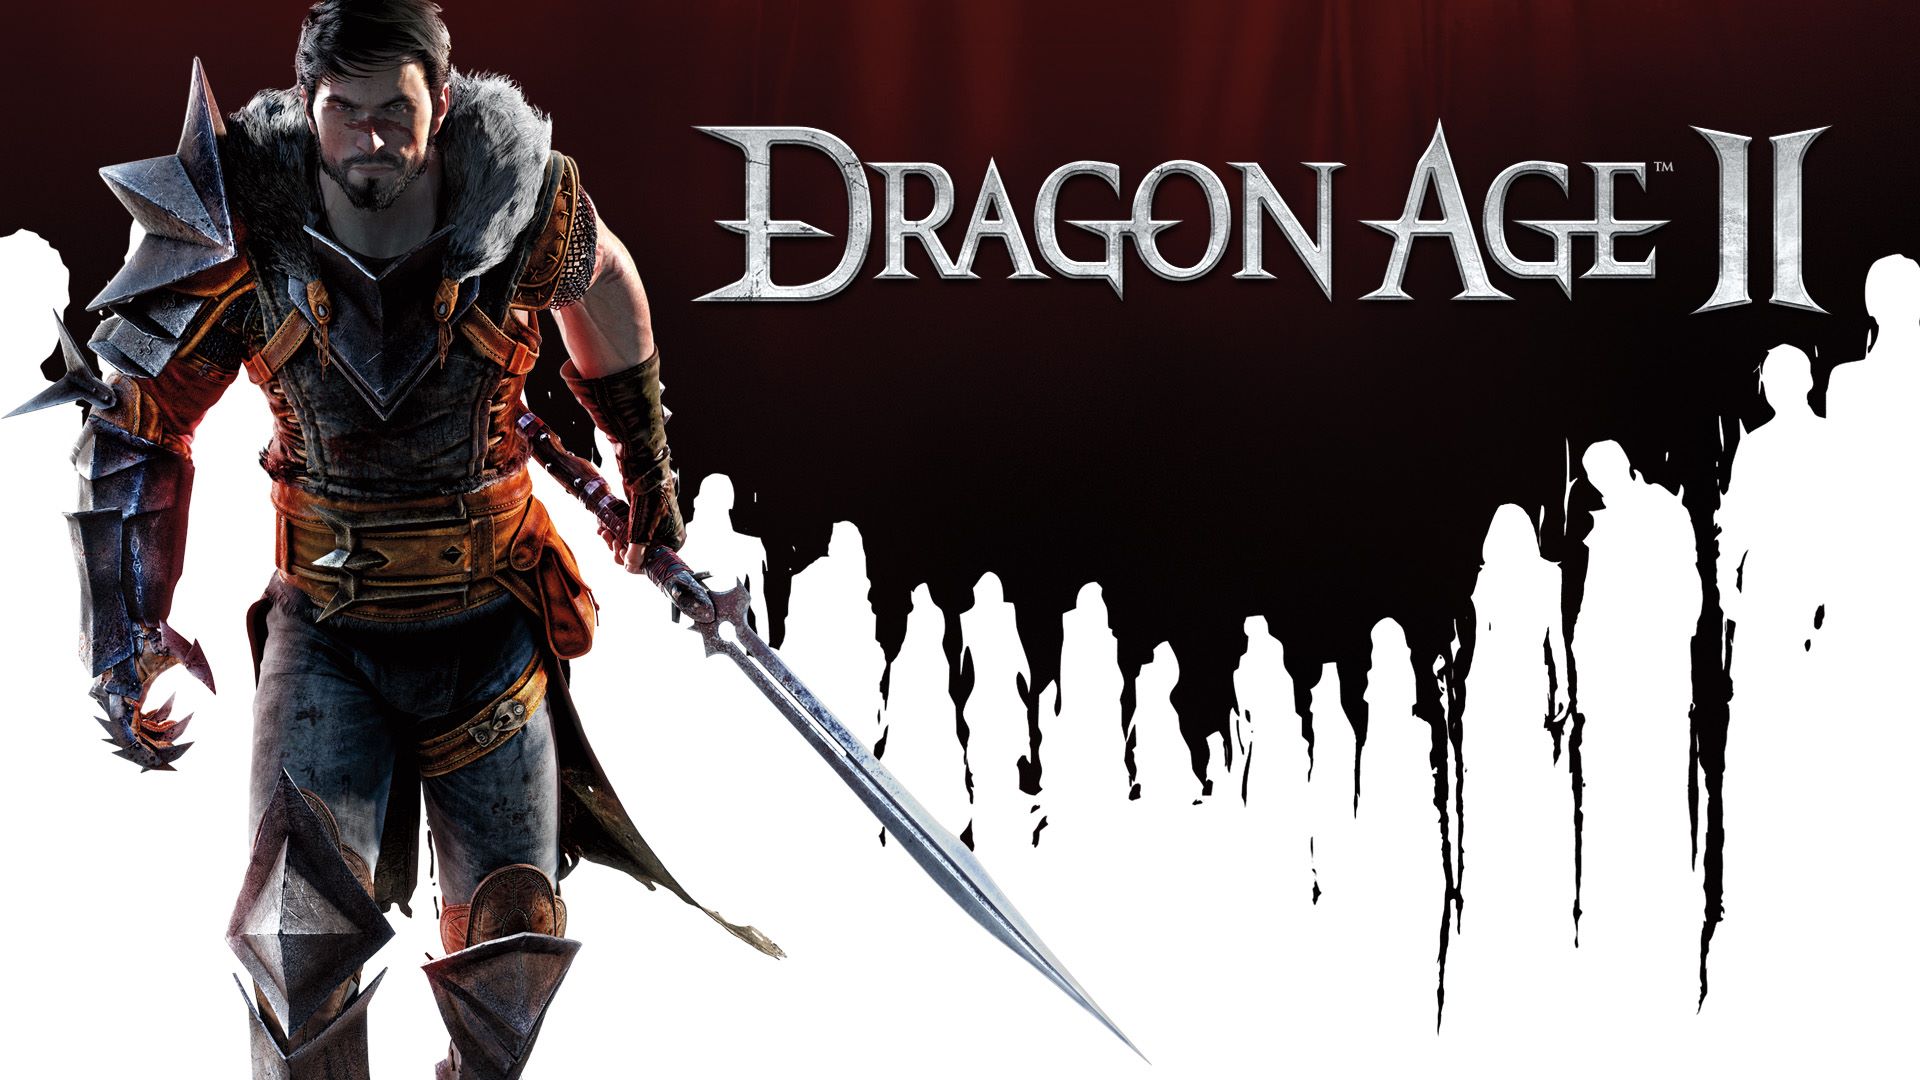 download dragon age origins free pc game full version all dlc